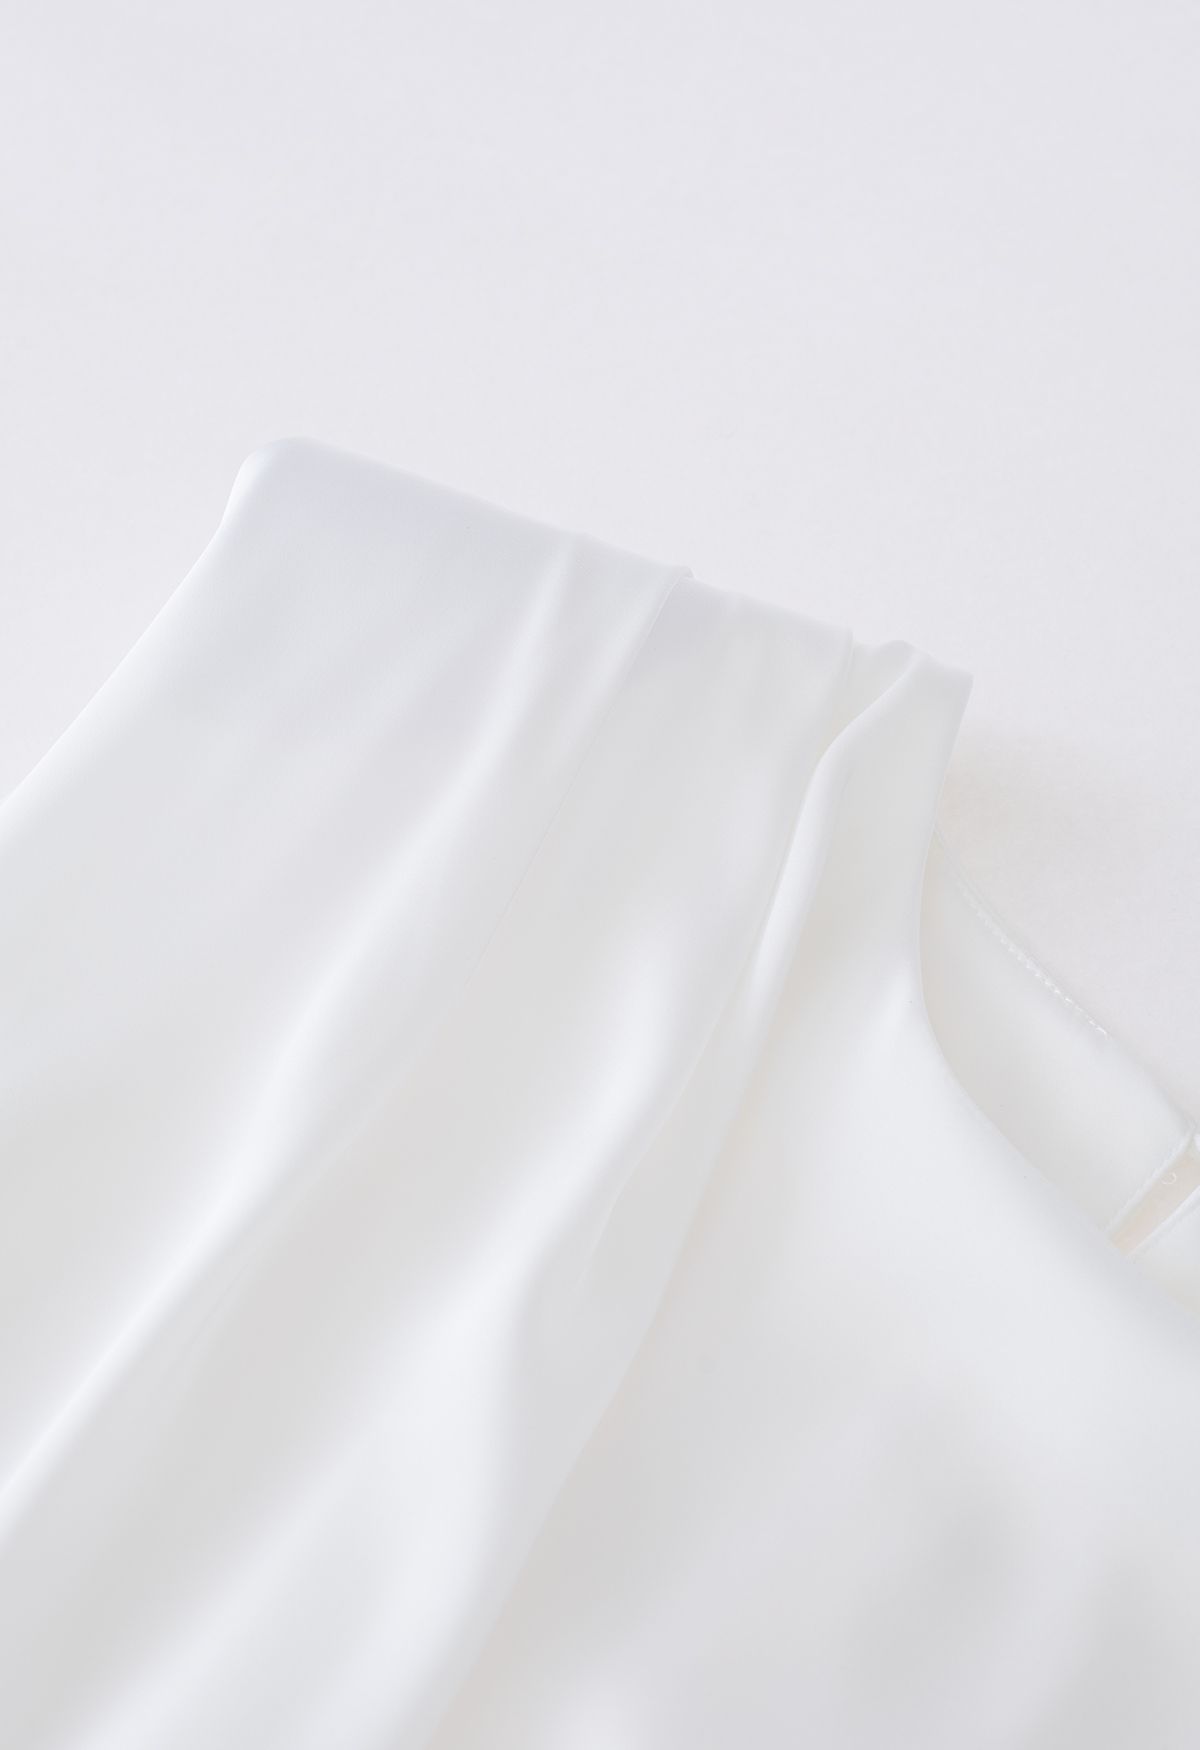 Satin Tie Back Sleeveless Top in White